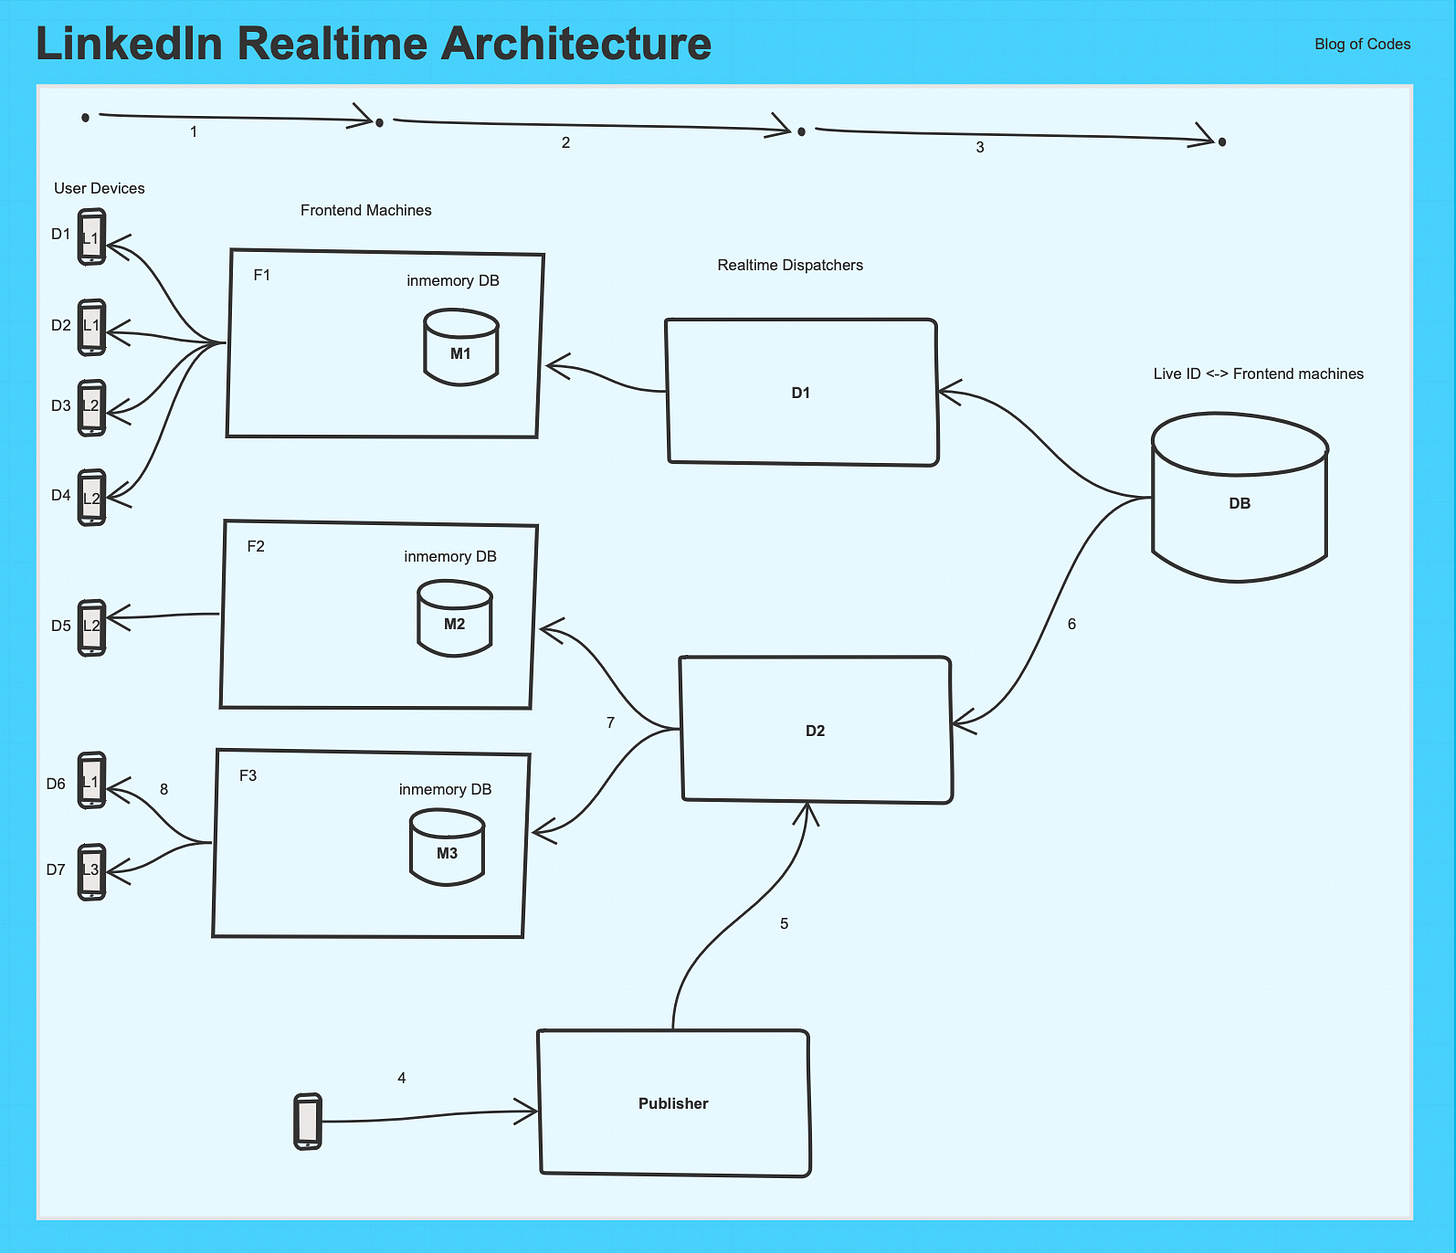 LinkedIn Realtime Architecture